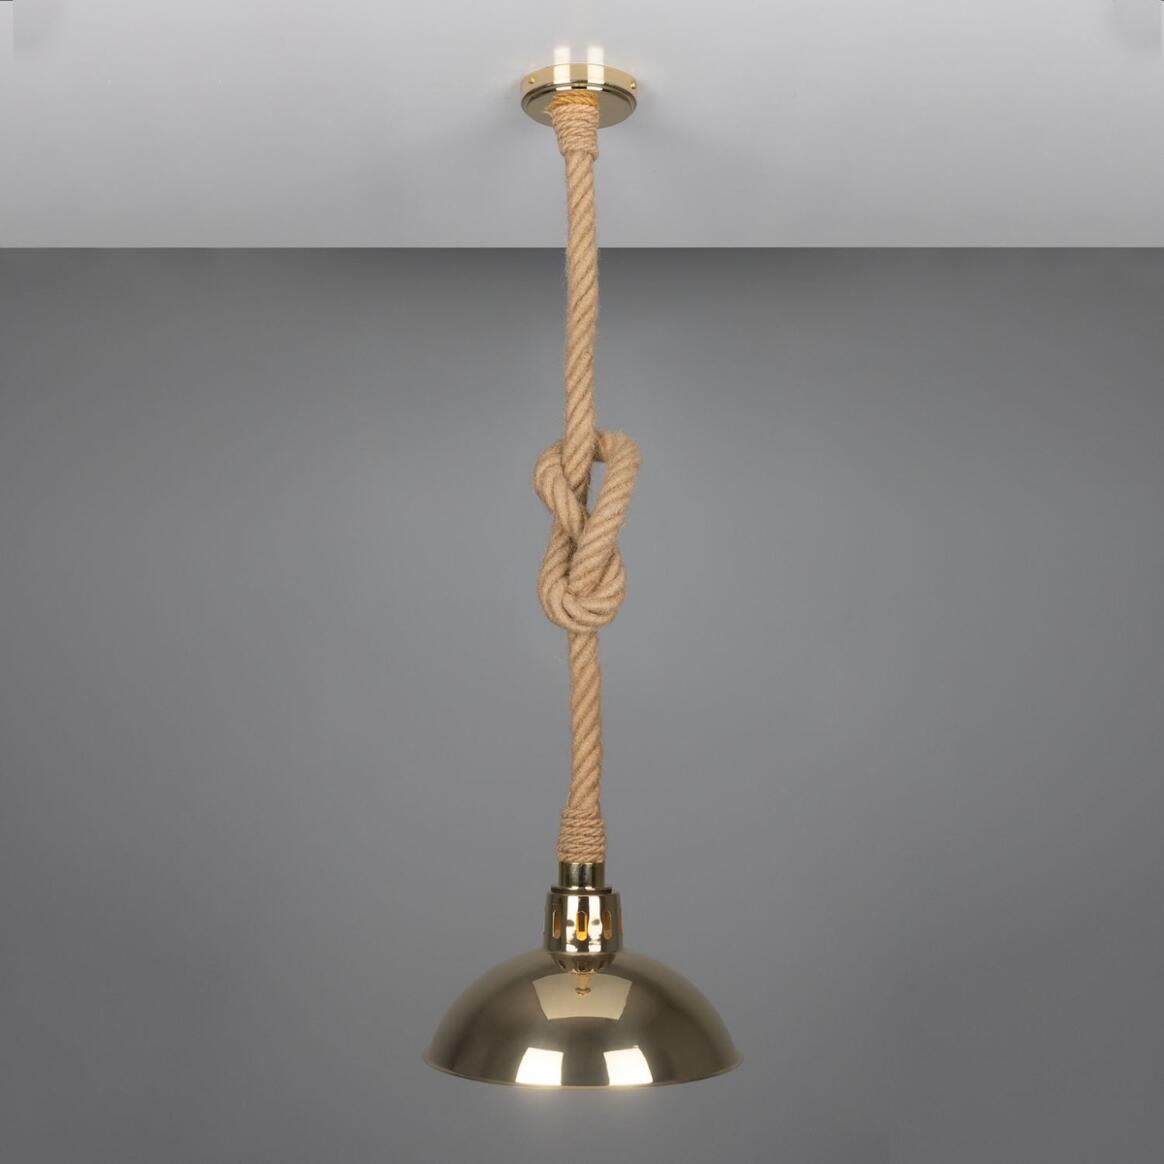 Tahiti Jute Rope Pendant Light with Vintage Brass Shade 11.8